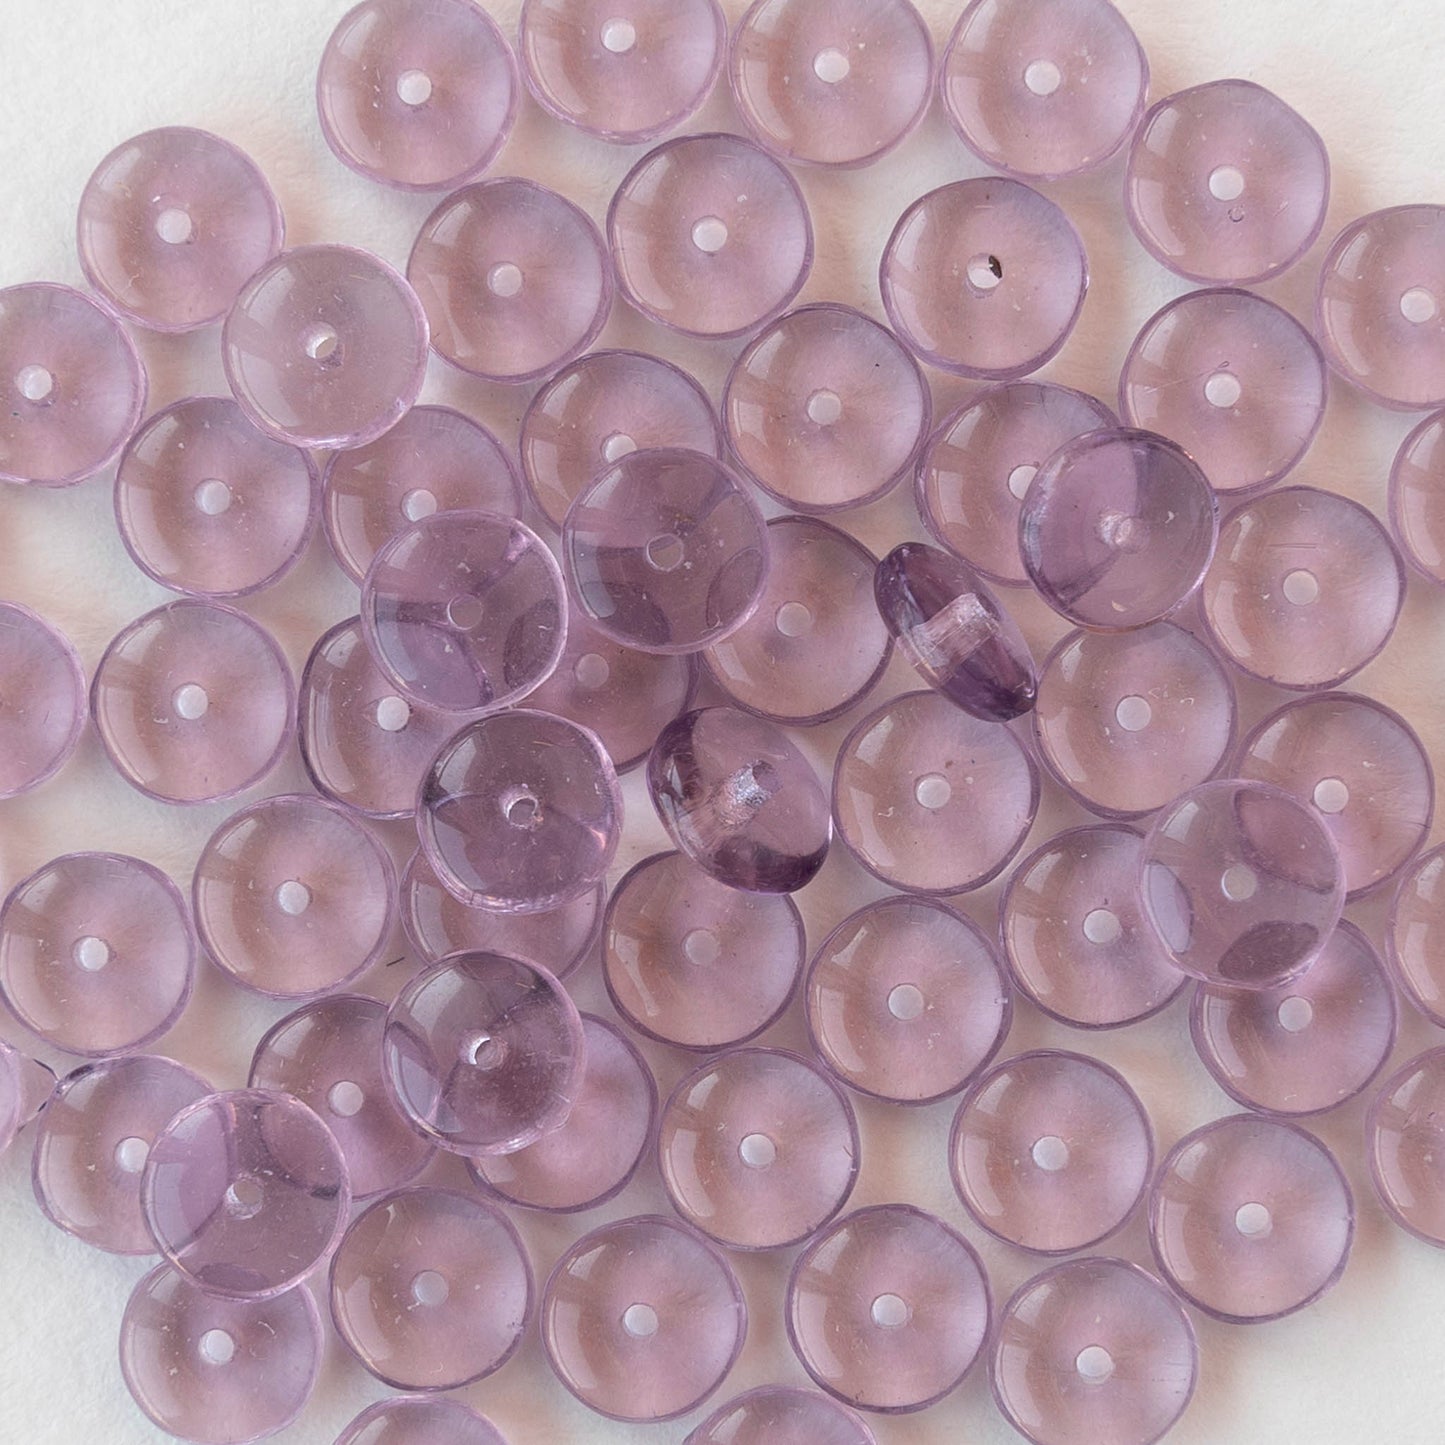 6mm Rondelle Beads - Transparent Light Amethyst Purple - 100 Beads